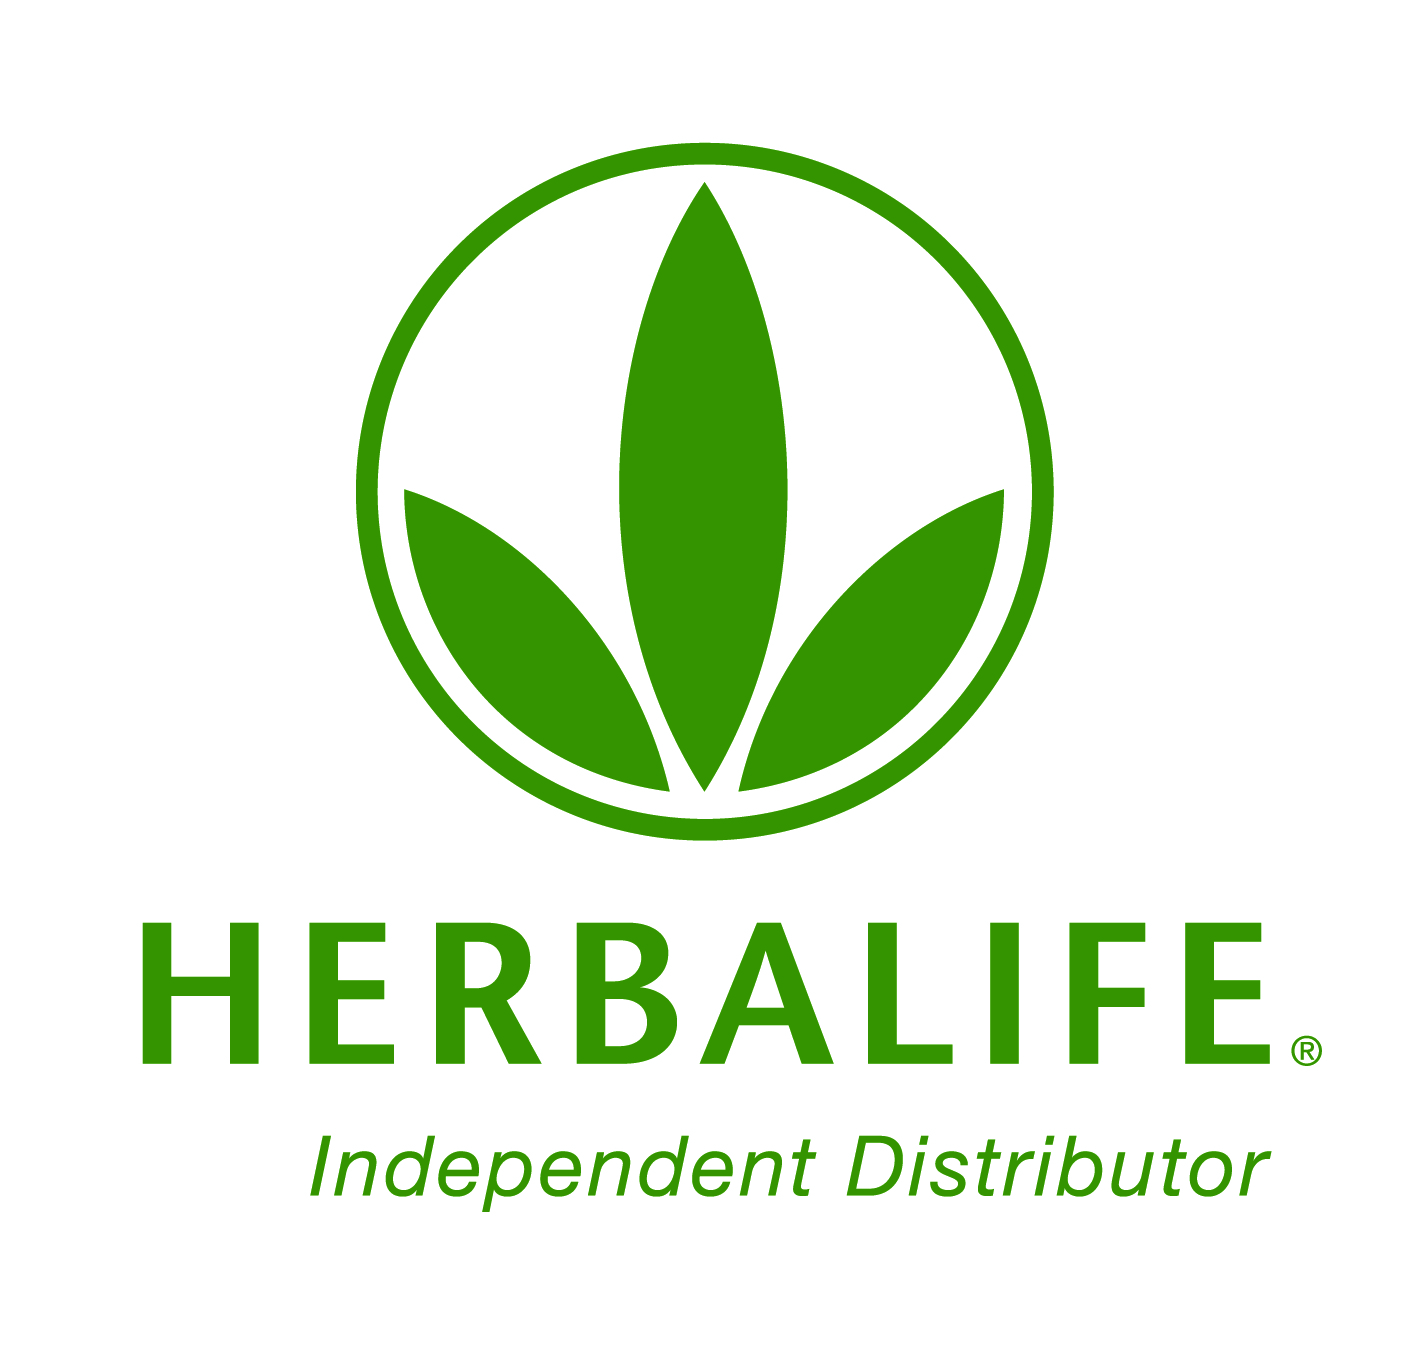 Herbalife Malaysia Independent Distributor @ 012-7897733: HERBALIFE